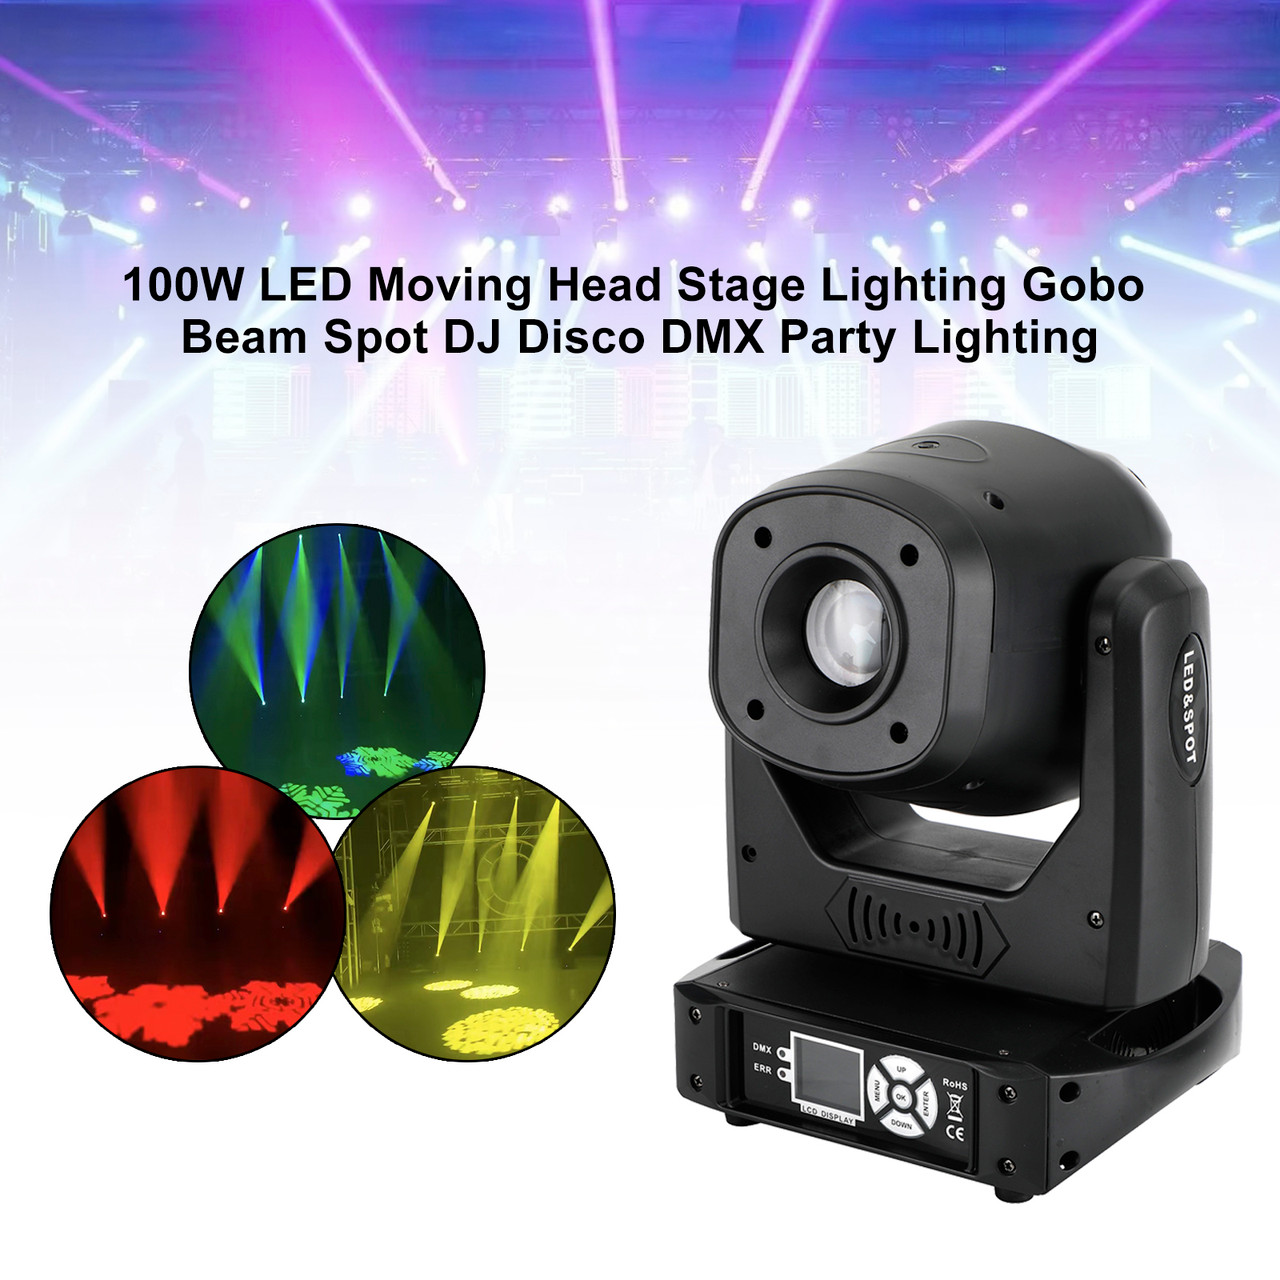 100W LED Moving Head Stage Lighting Gobo Beam Spot DJ Disco DMX Party Lighting